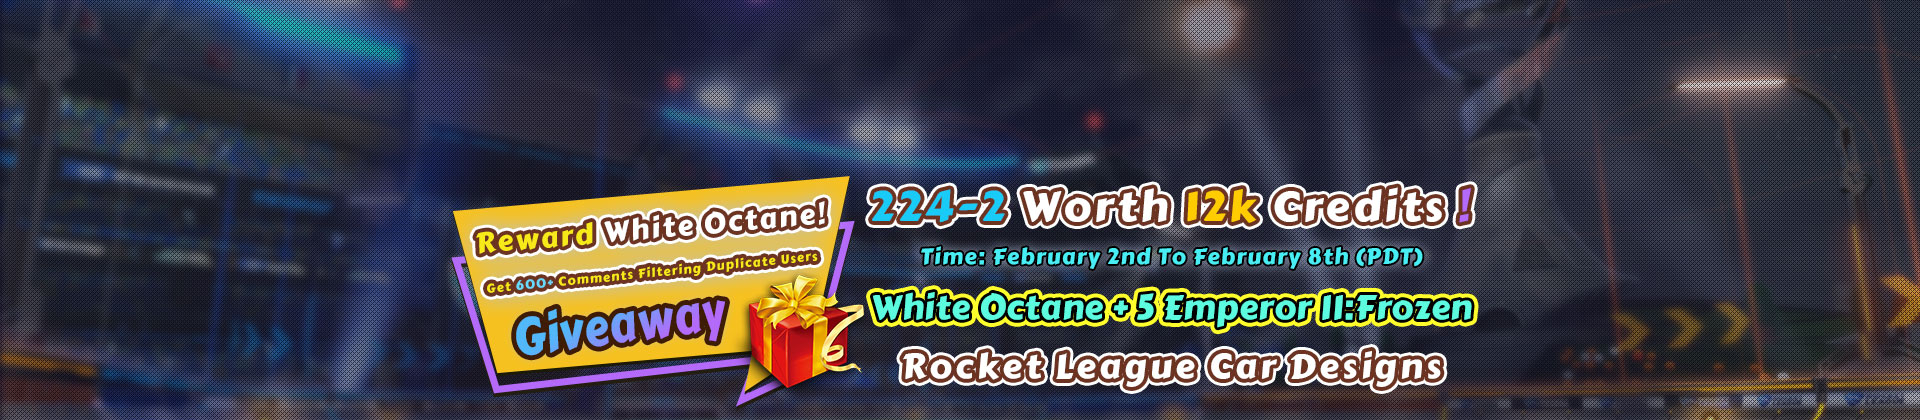 Rocket League Items Giveaway 224-2